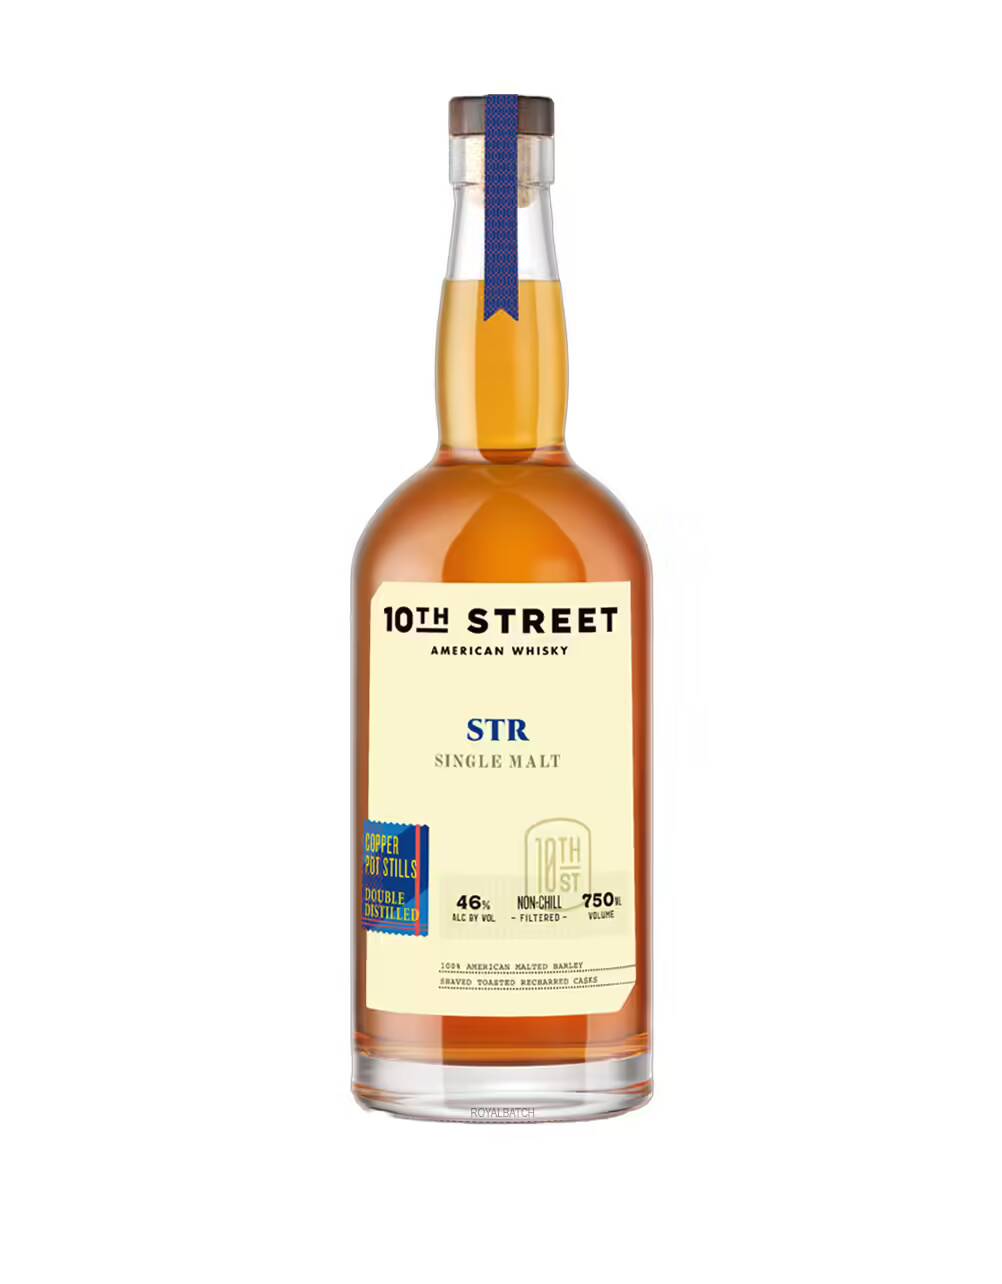 10th Street STR Single Malt American Whiskey